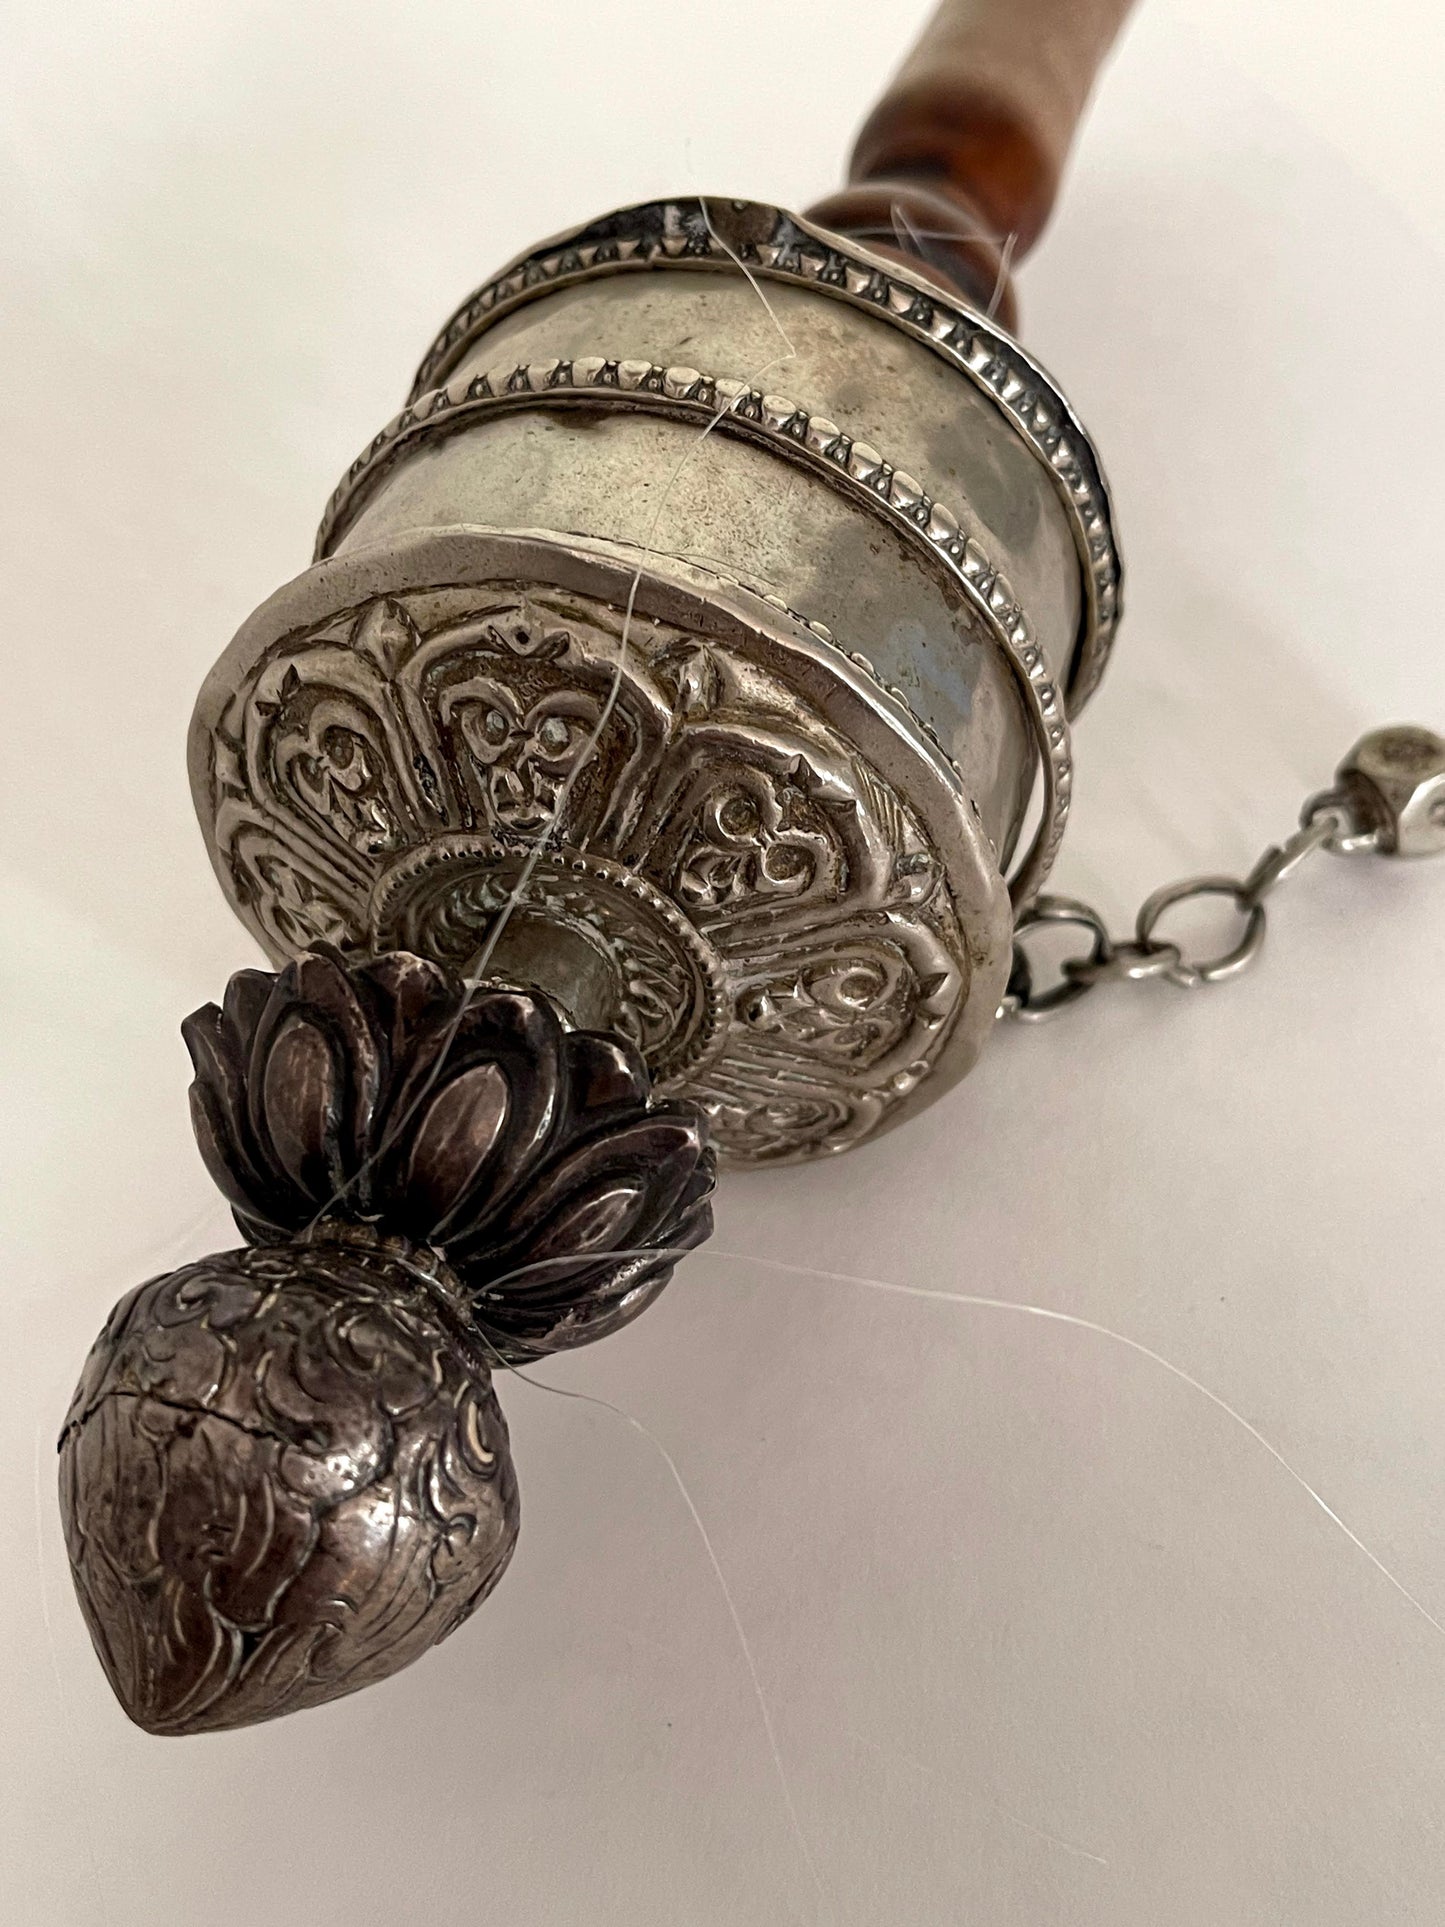 An original handmade vintage Tibetan silver handheld prayer wheel simply carved and decorated